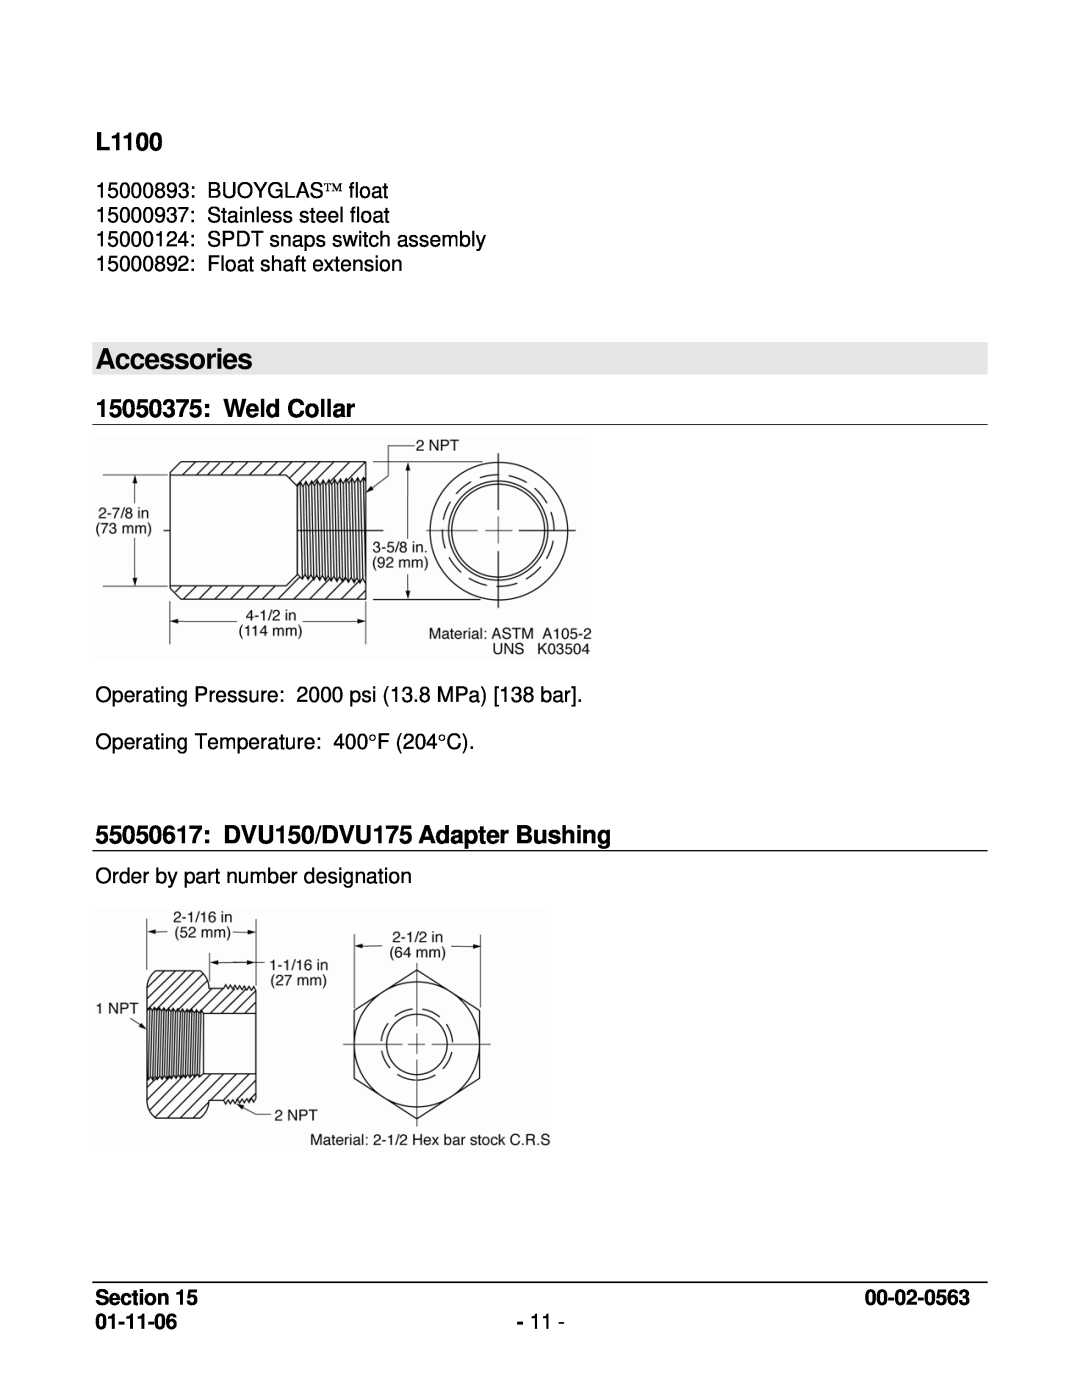 Murphy LS200N manual Accessories, L1100, Weld Collar, 55050617 DVU150/DVU175 Adapter Bushing, Section, 00-02-0563, 01-11-06 